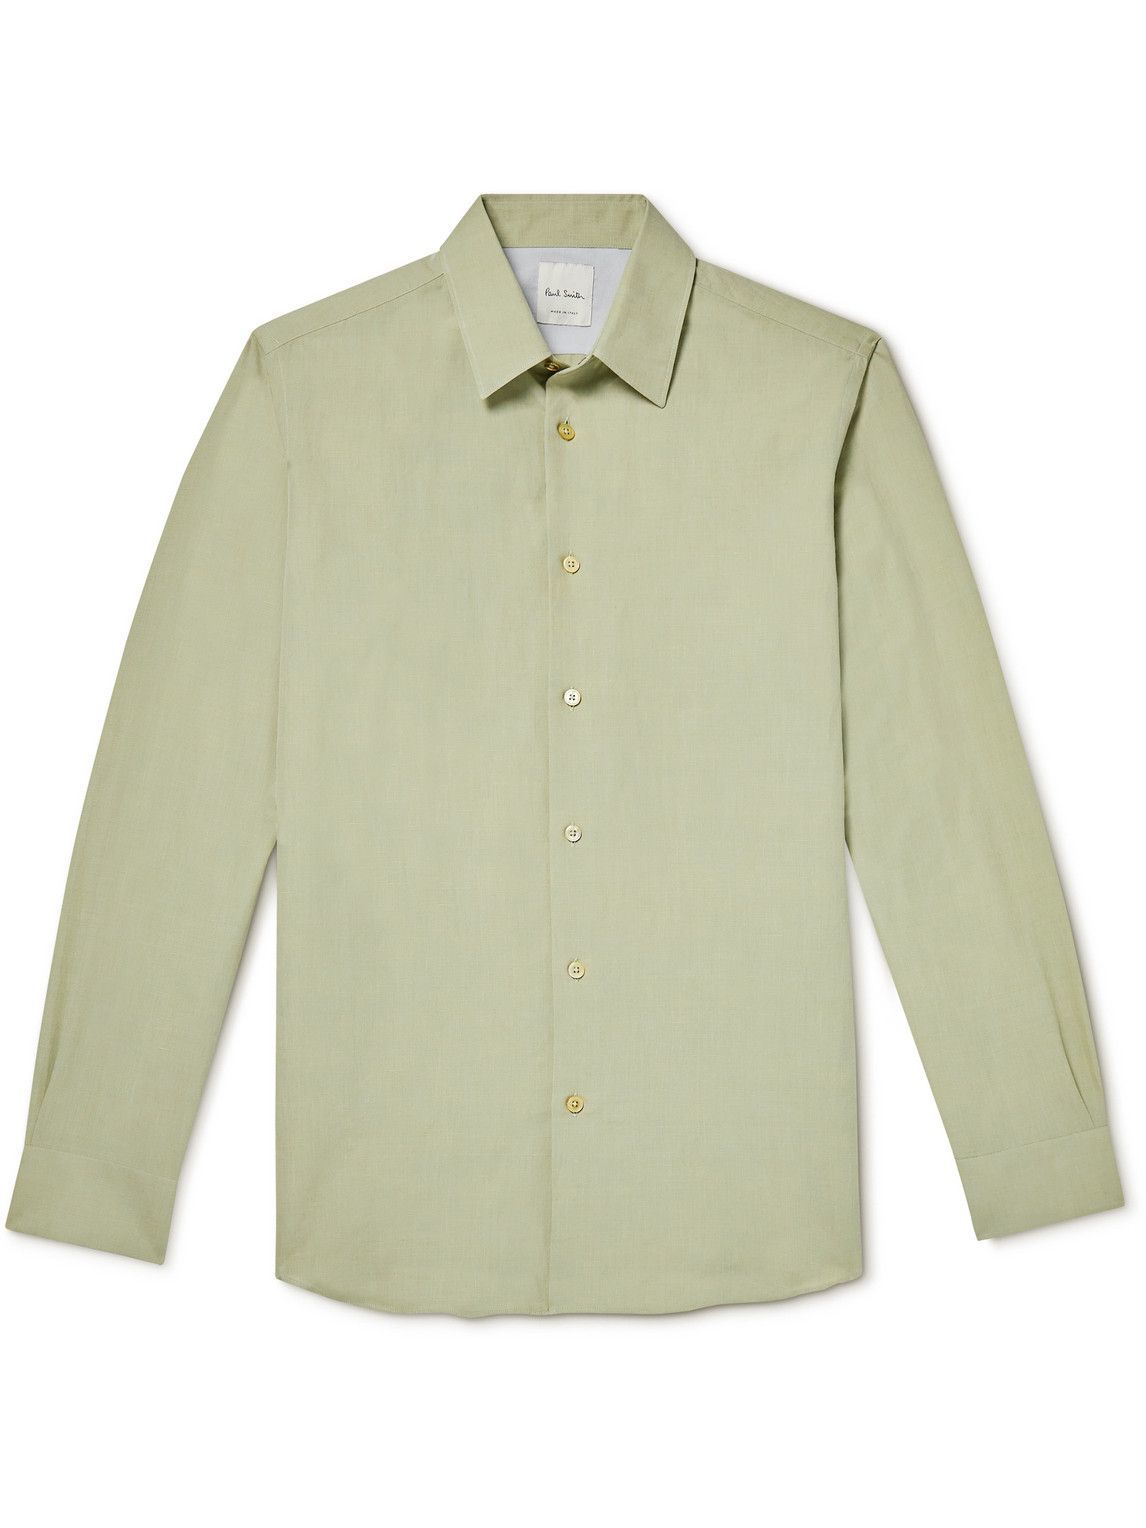 Paul Smith - Cotton and Linen-Blend Shirt - Green Paul Smith